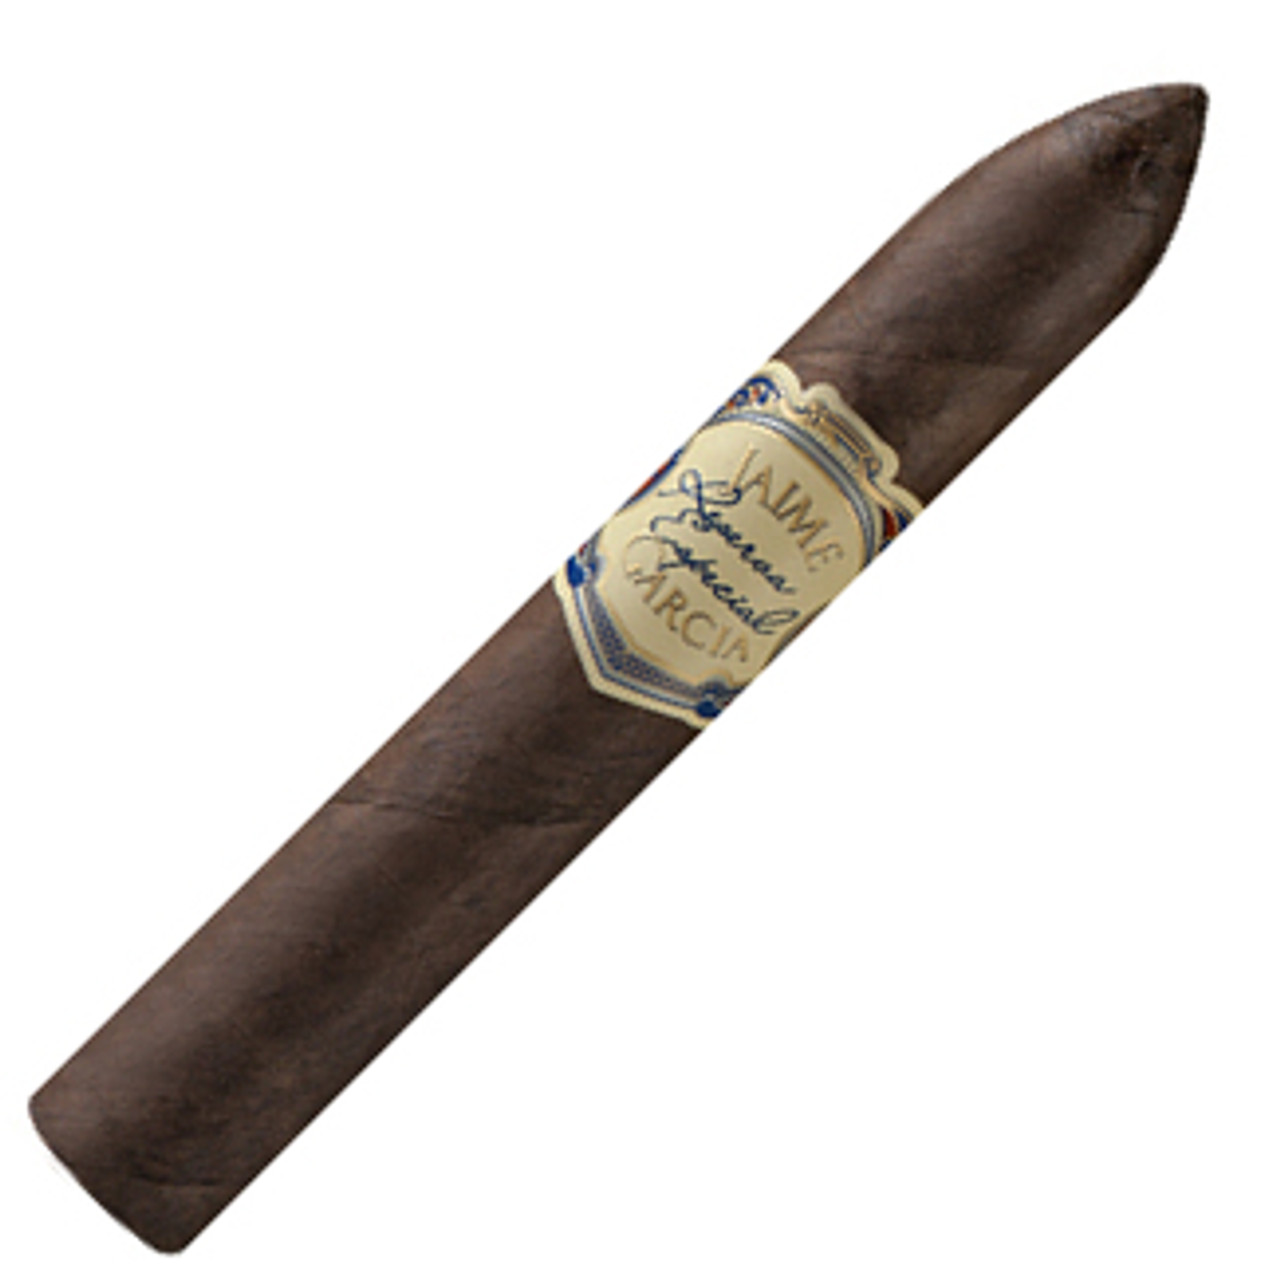 Jaime Garcia Reserva Especial Belicoso Cigars - 5.5 x 52 (Box of 20)